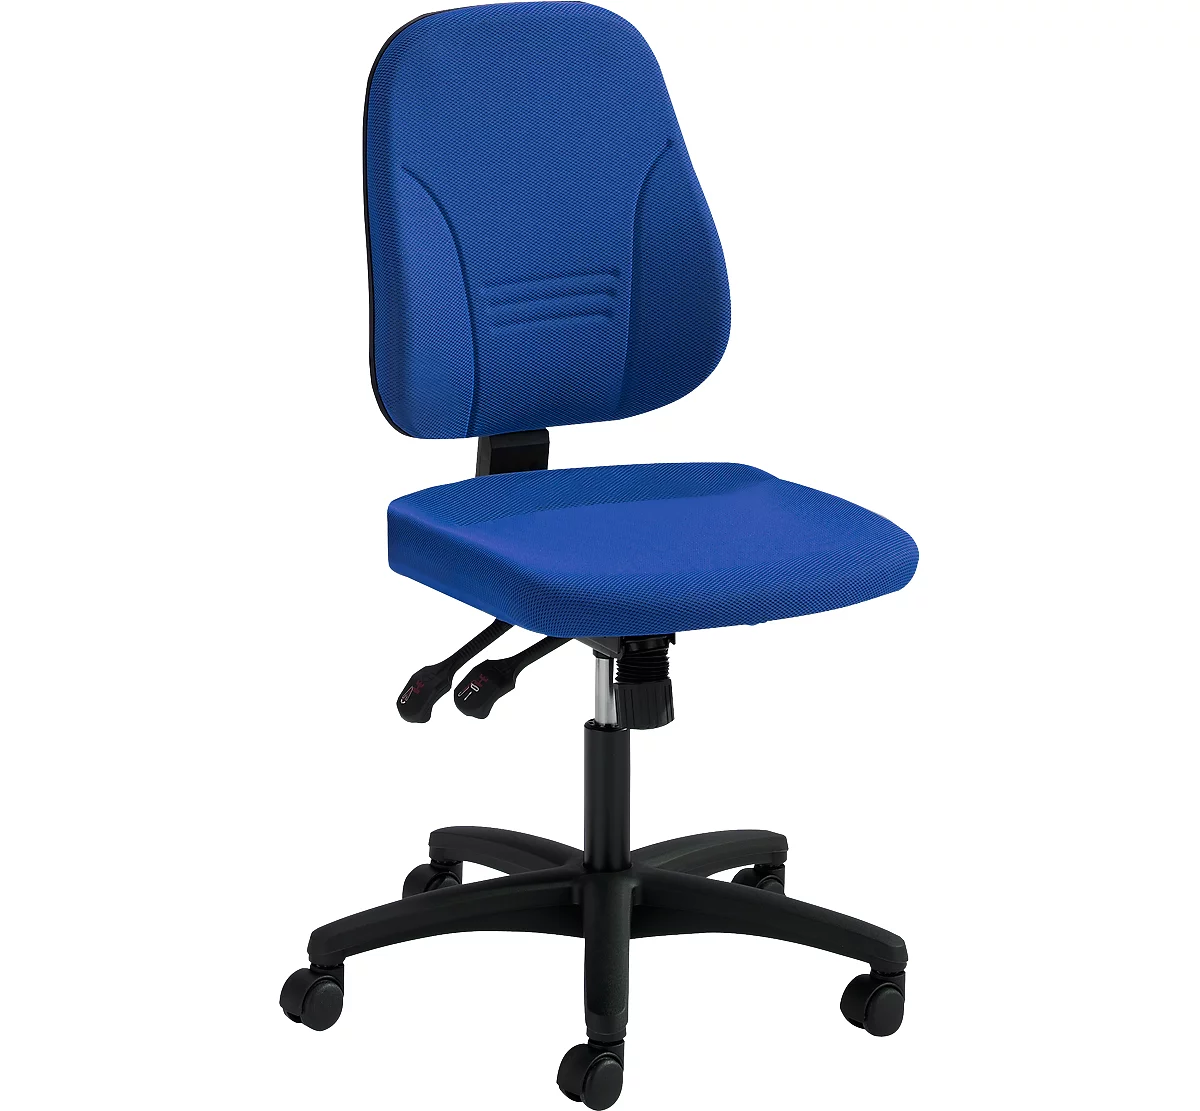 Prosedia Bürostuhl YOUNICO PLUS 8, Synchronmechanik , ohne Armlehnen, niedrige 3D-Rückenlehne, blau